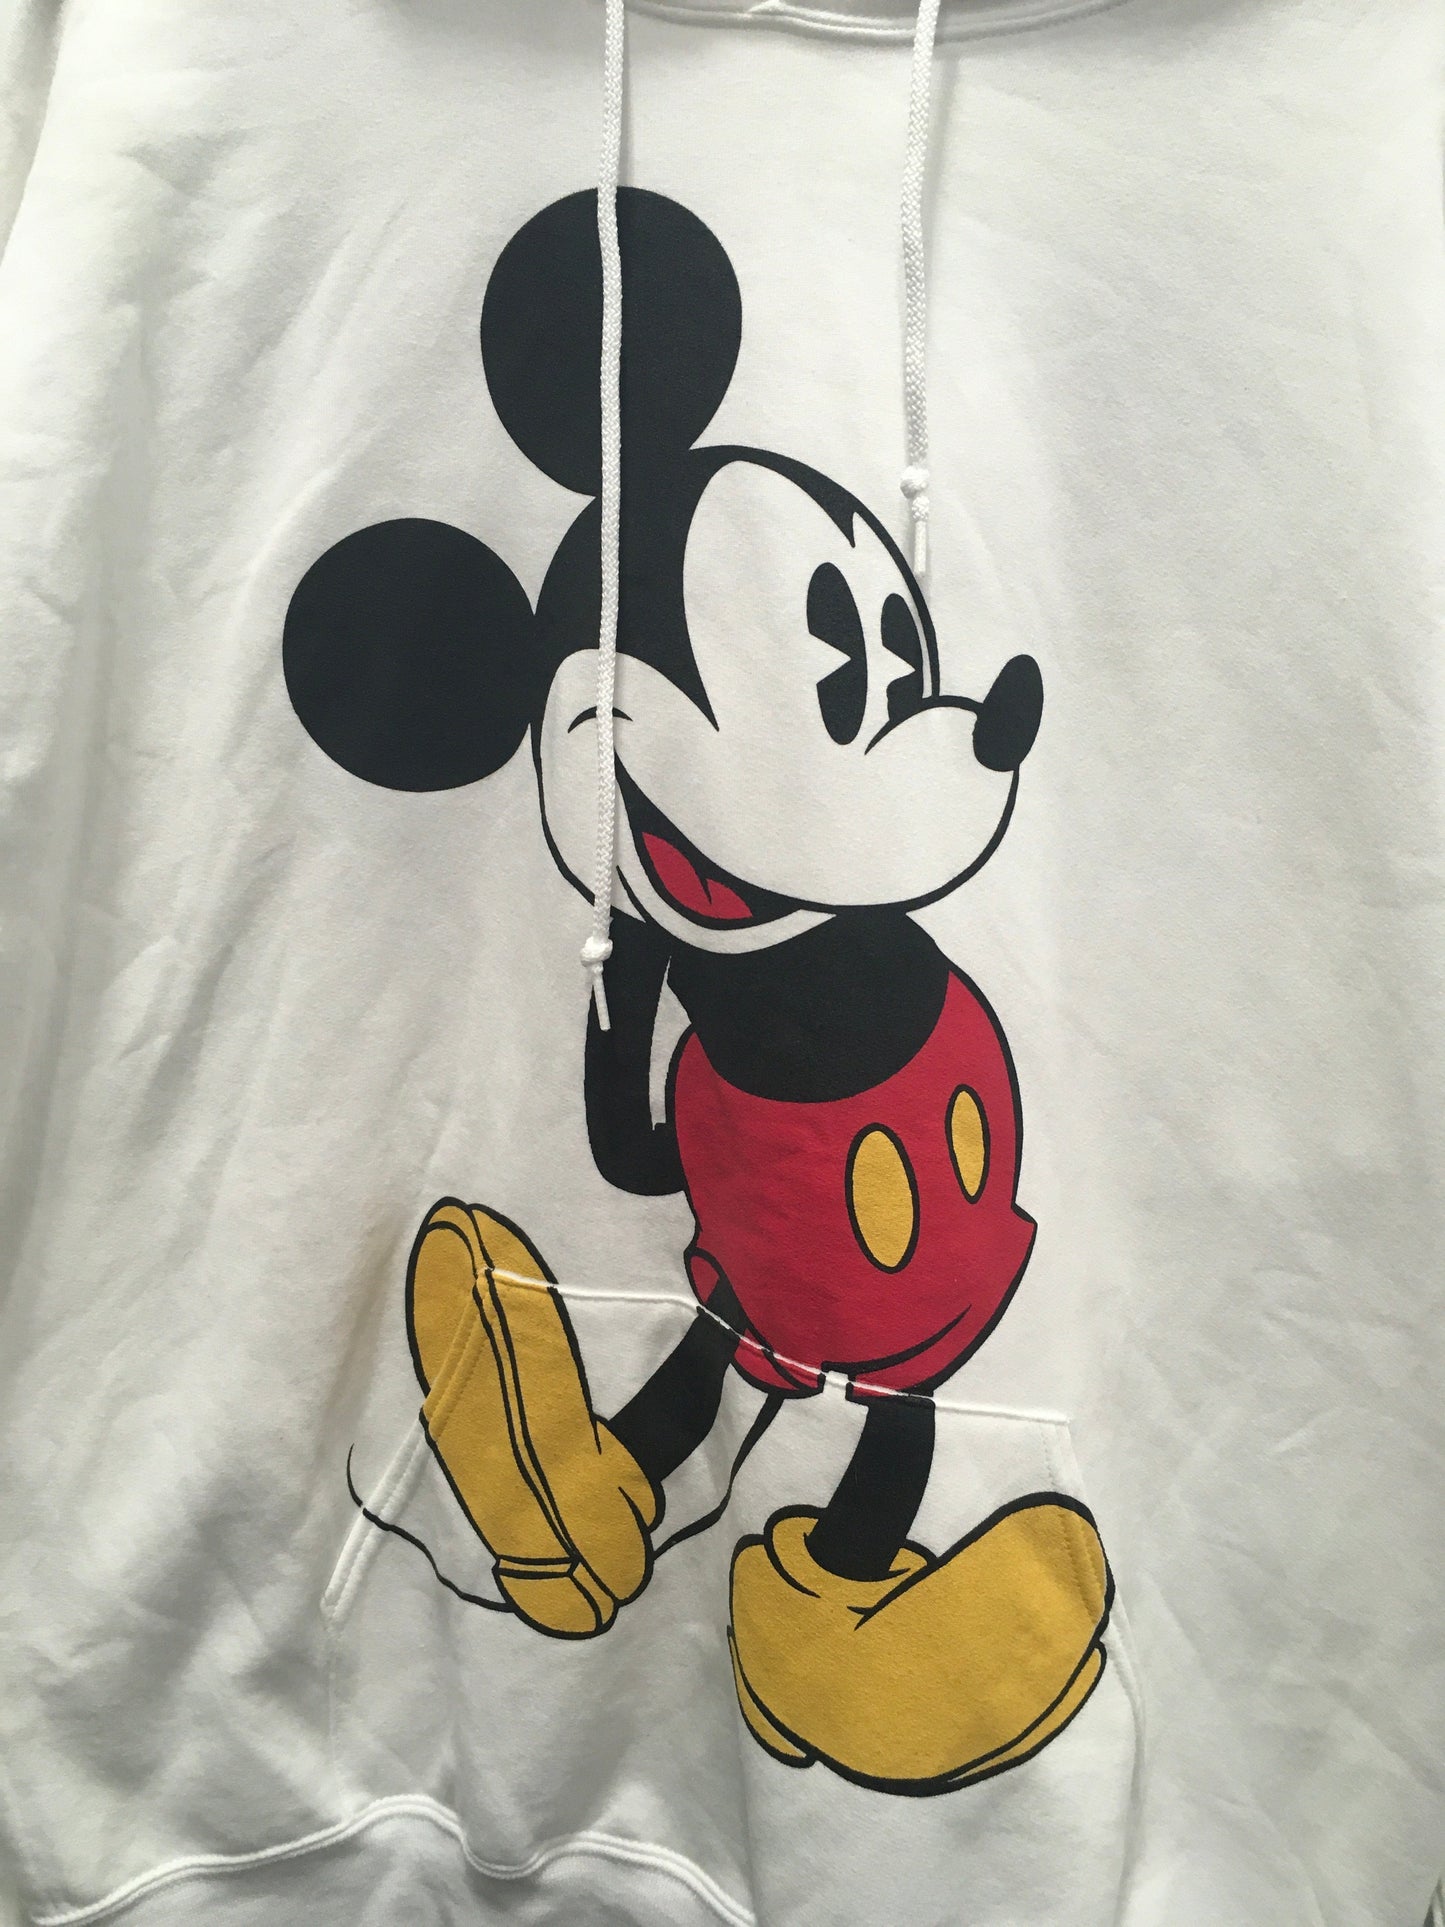 White Athletic Sweatshirt Hoodie Disney, Size Xl